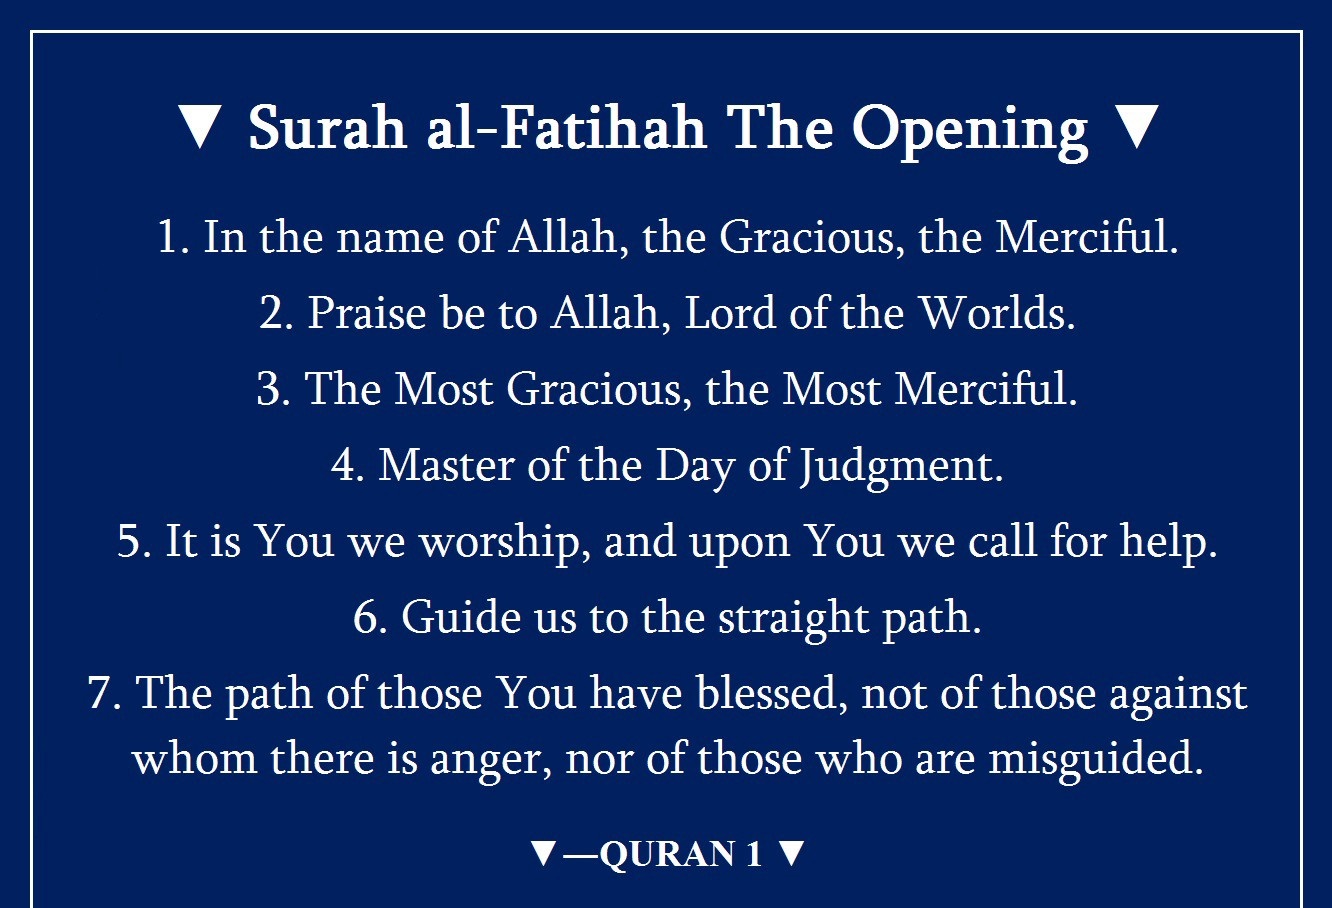 Surah al-Fatihah (The Opening)